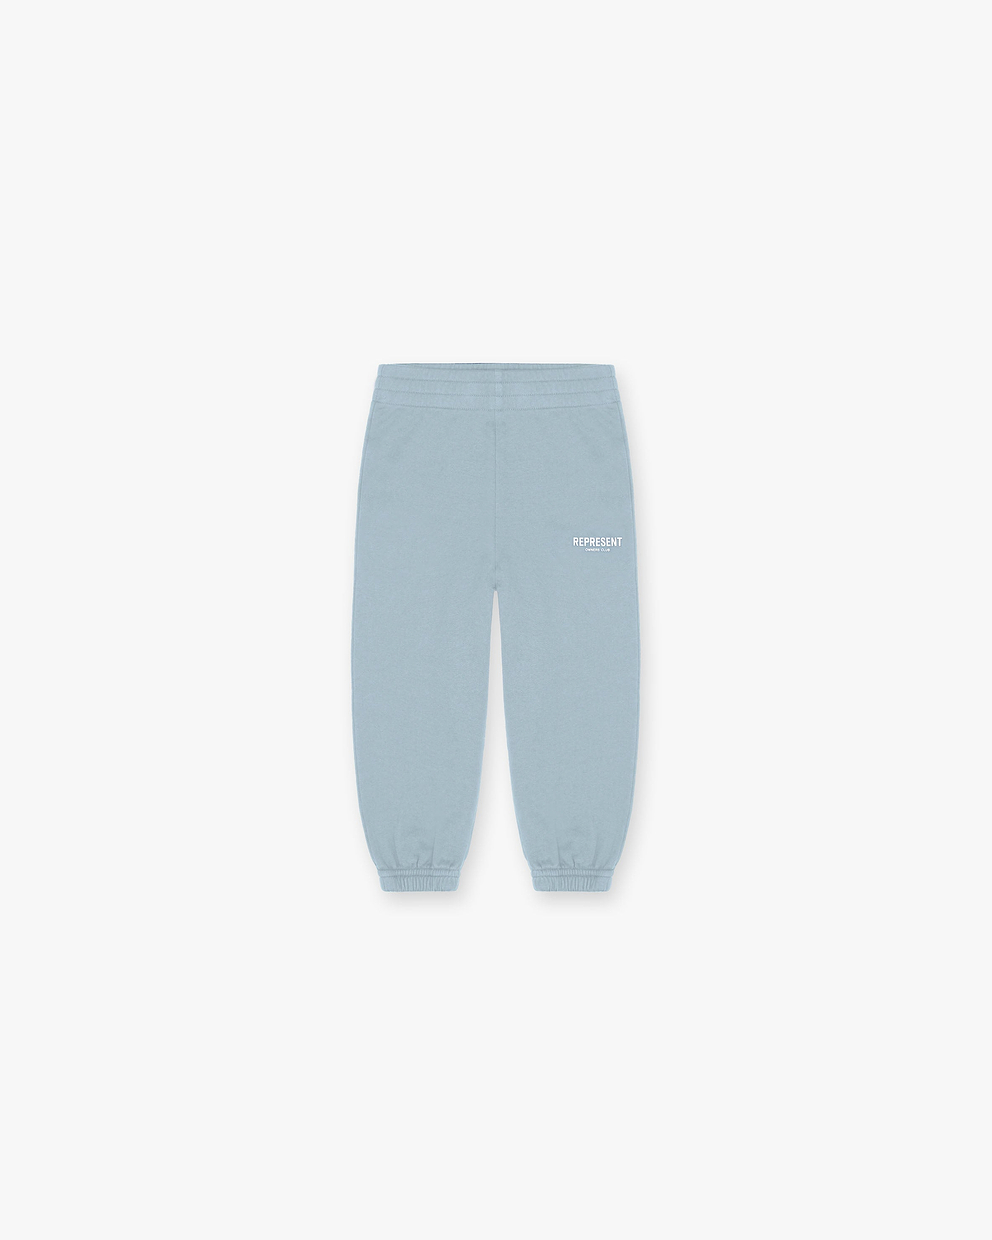 Represent Mini Owners Club Sweatpants - Powder Blue